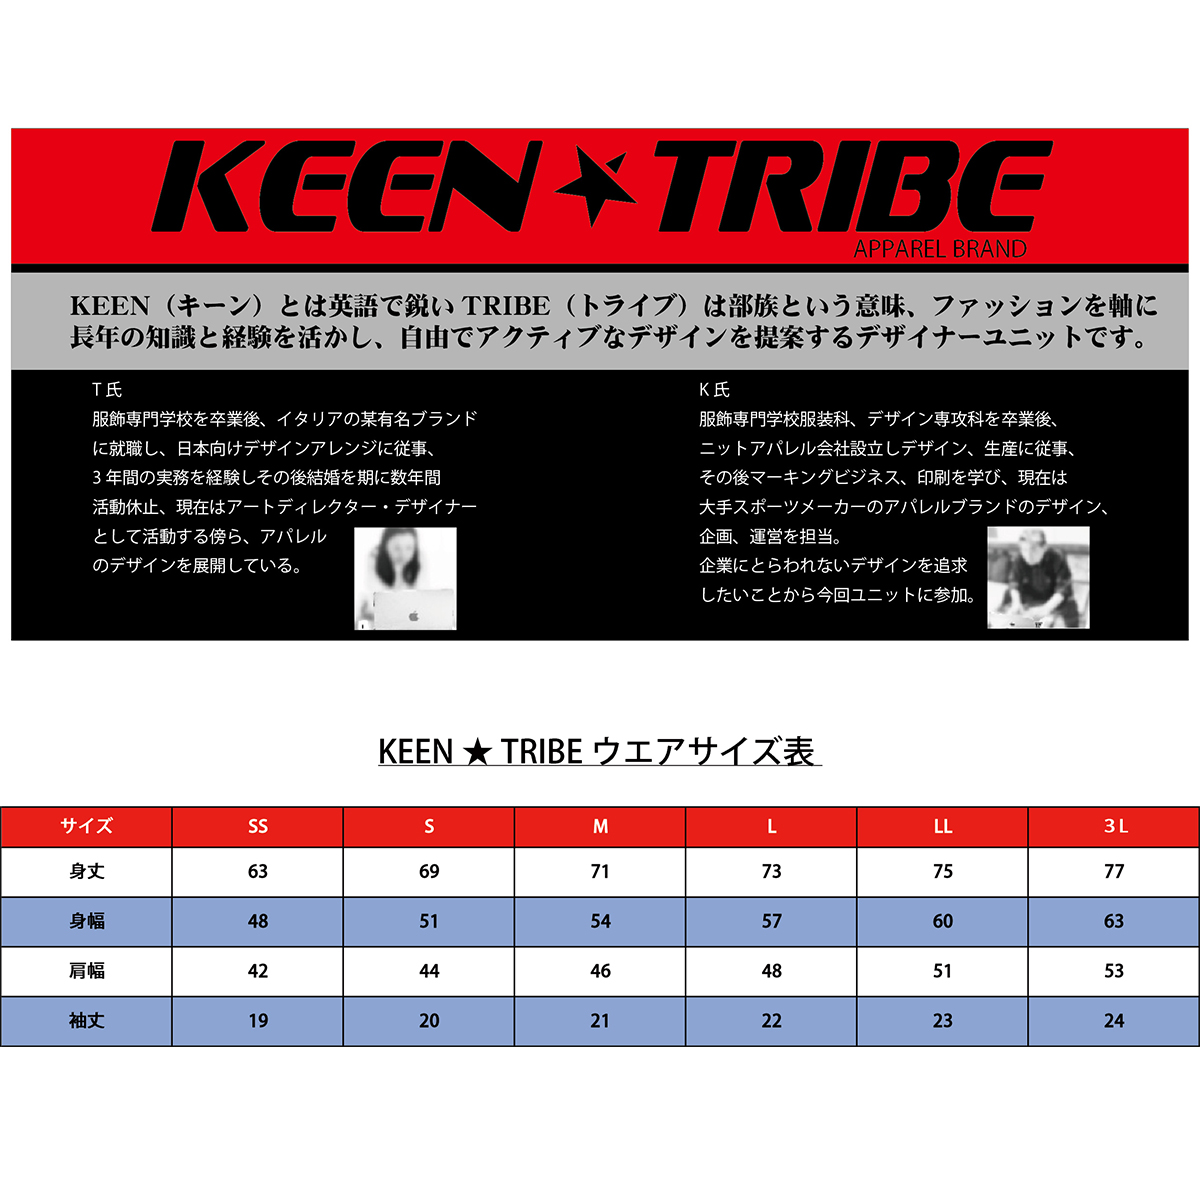 KEEN ★ TRIBE　KT-56(受注生産)【特別価格】